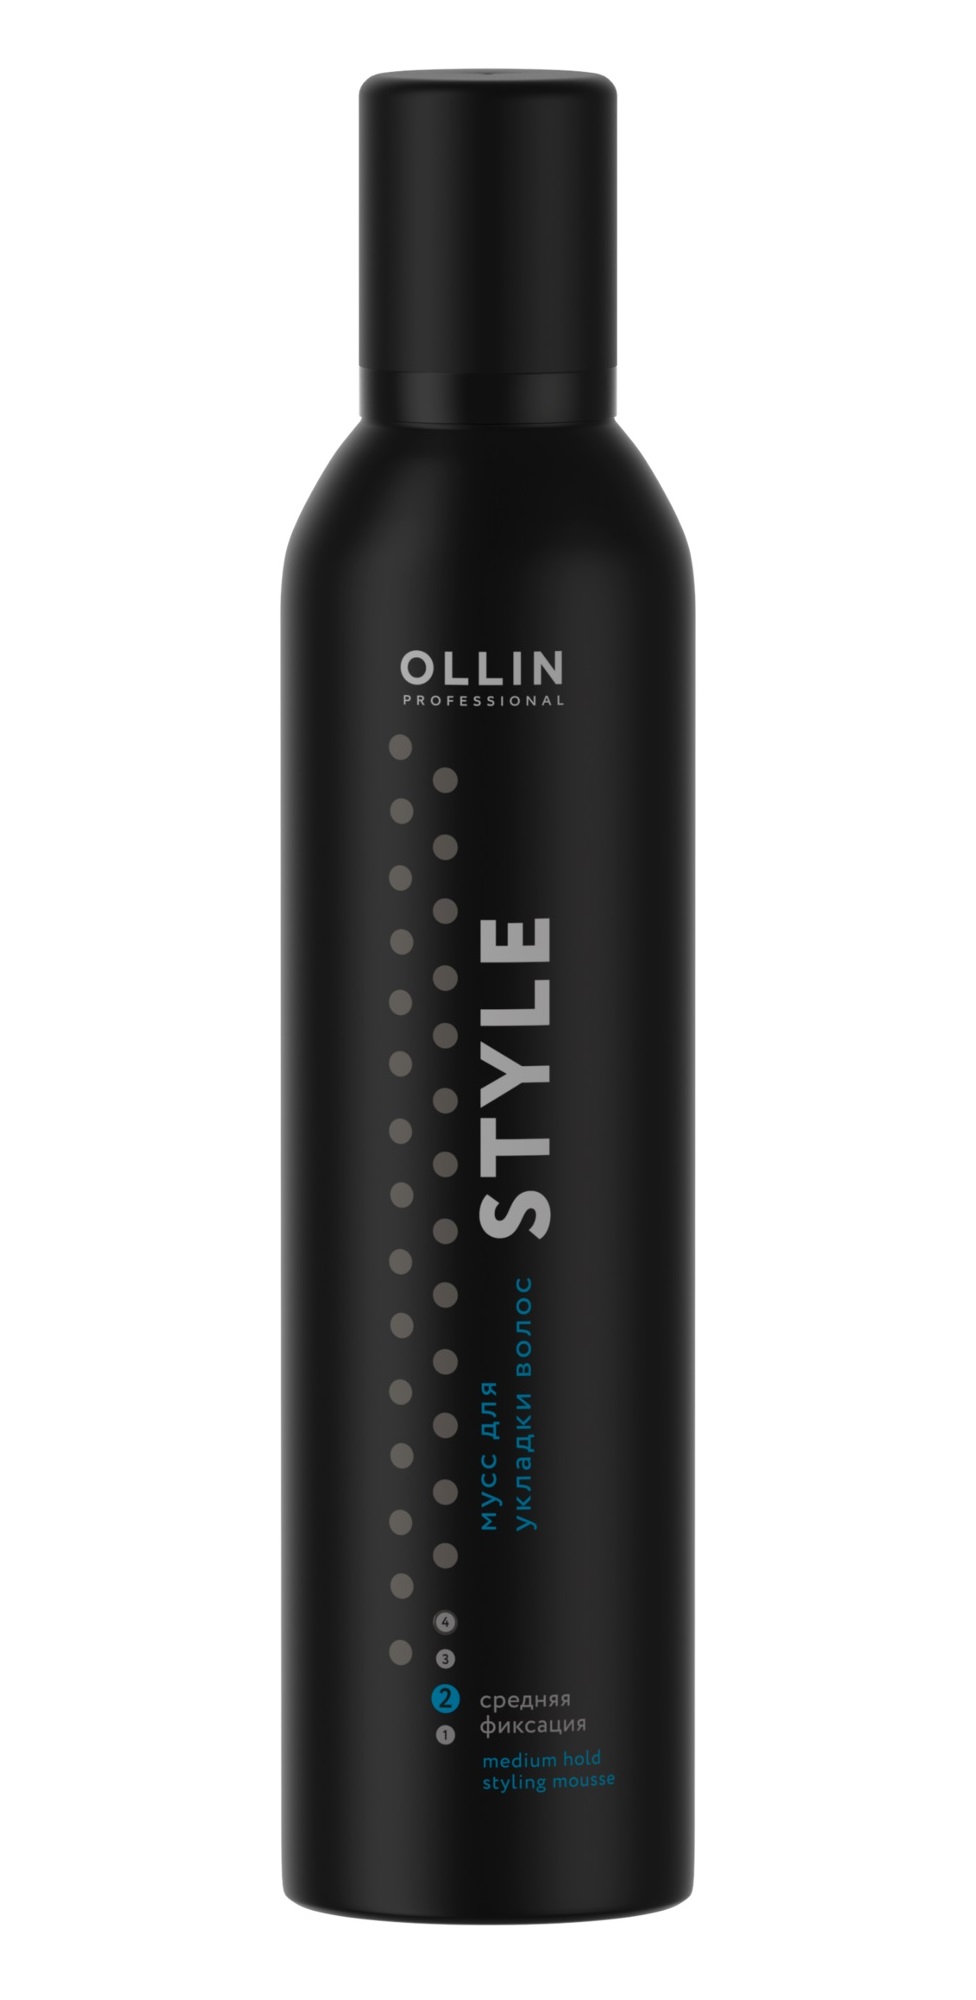 Ollin Professional Мусс для укладки волос средней фиксации, 250 мл (Ollin Professional, Style) мусс style сильной фиксации ollin professional 250 мл